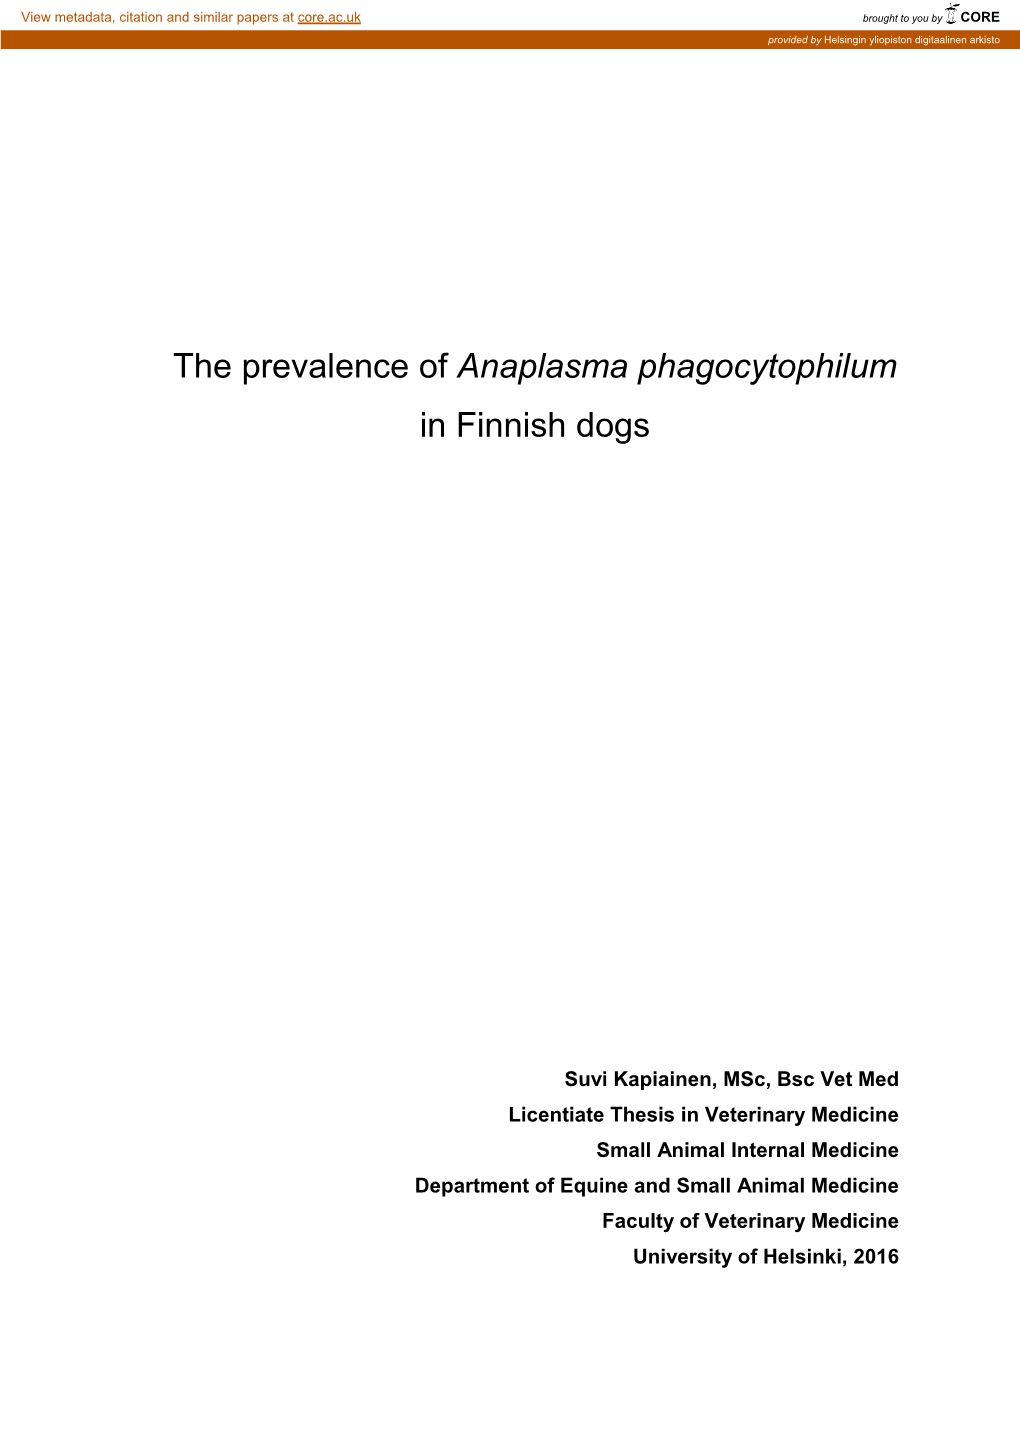 The Prevalence of Anaplasma Phagocytophilum in Finnish Dogs